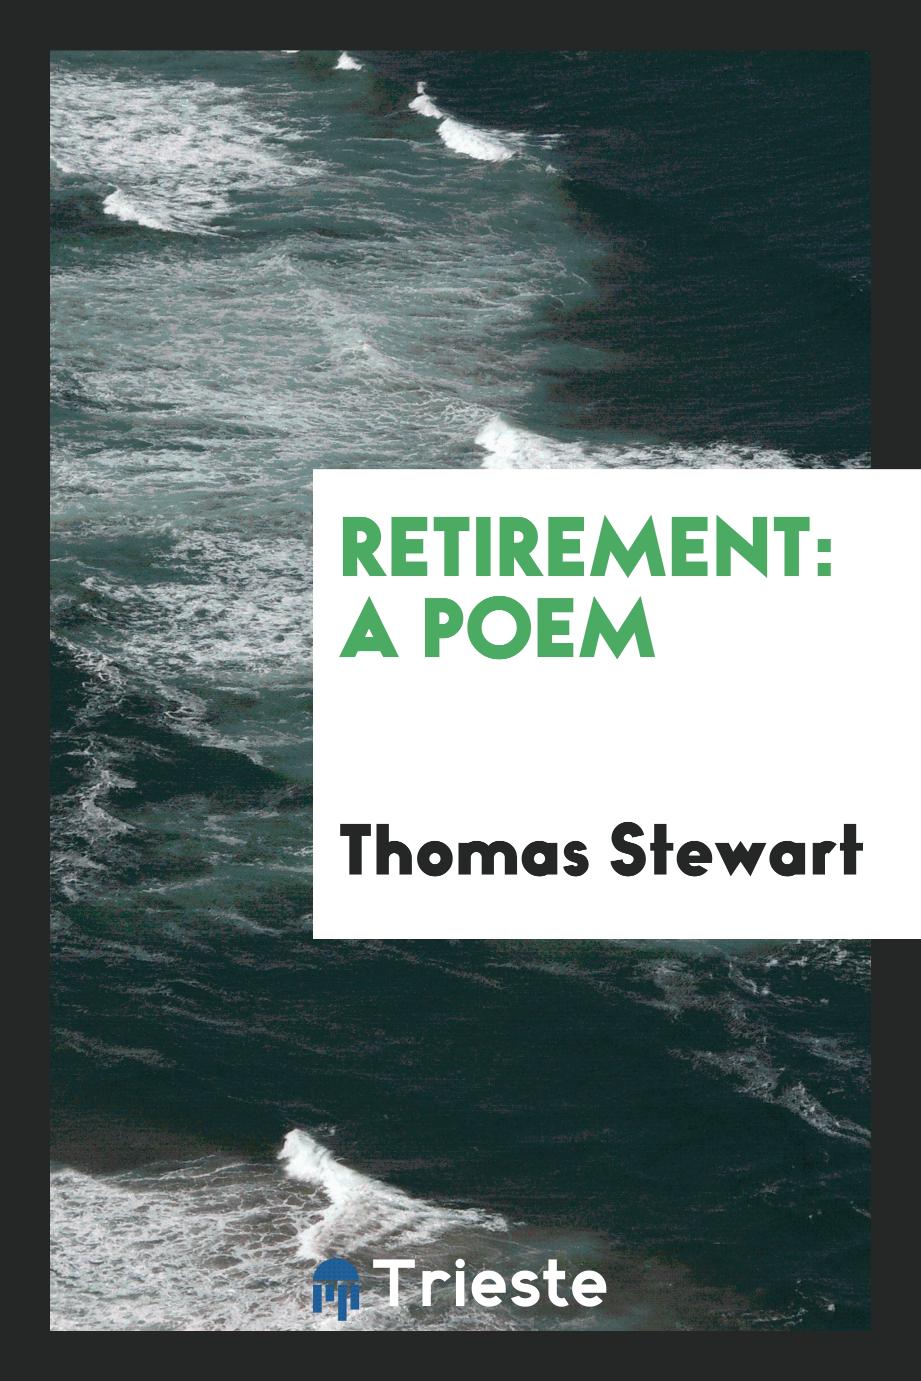 Retirement: a poem